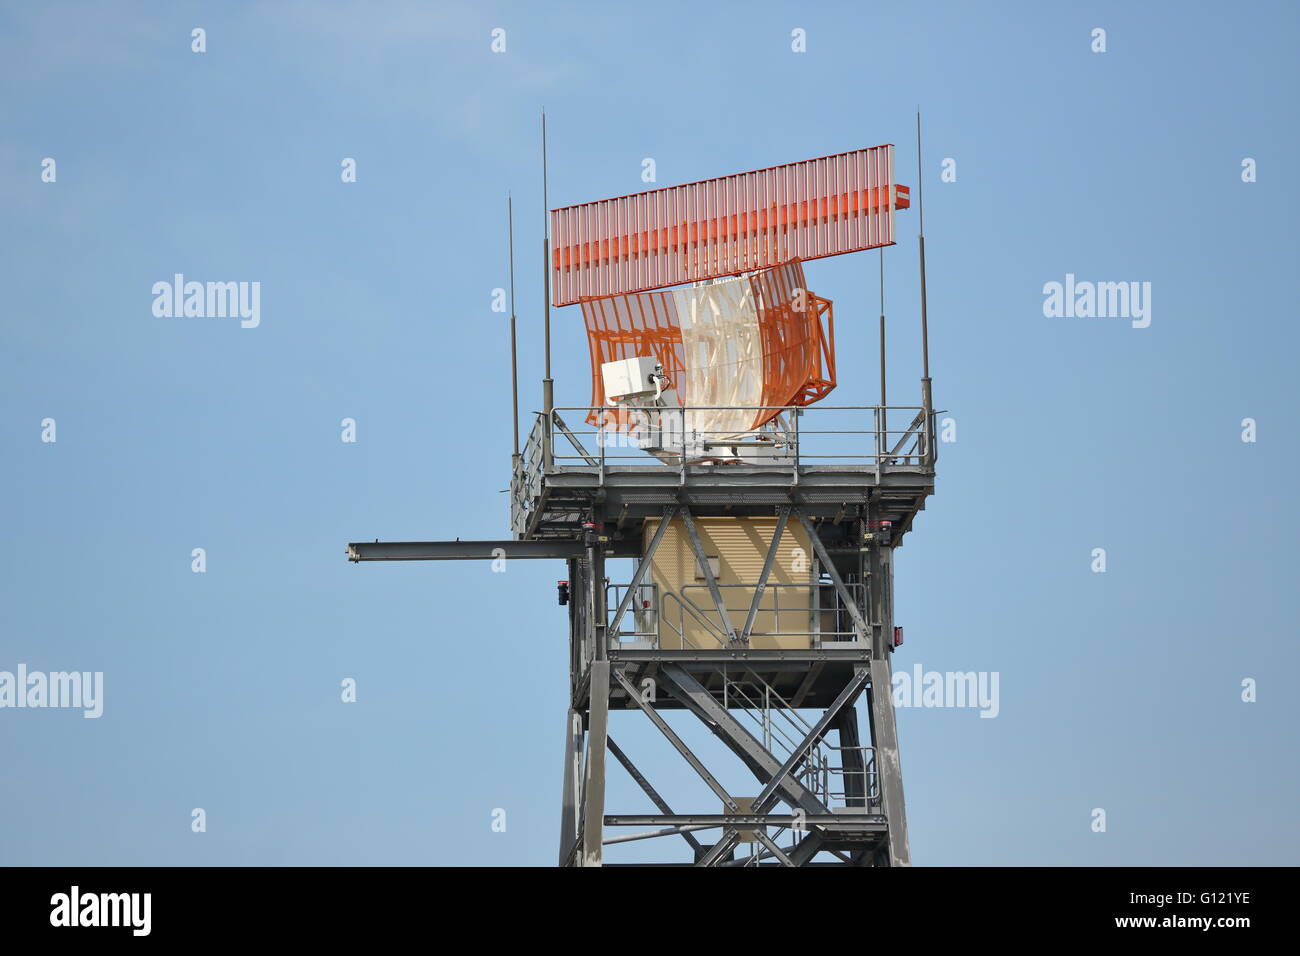 Air Traffic Ground Control Radar at London Heathrow Airport, UK Stock Photo